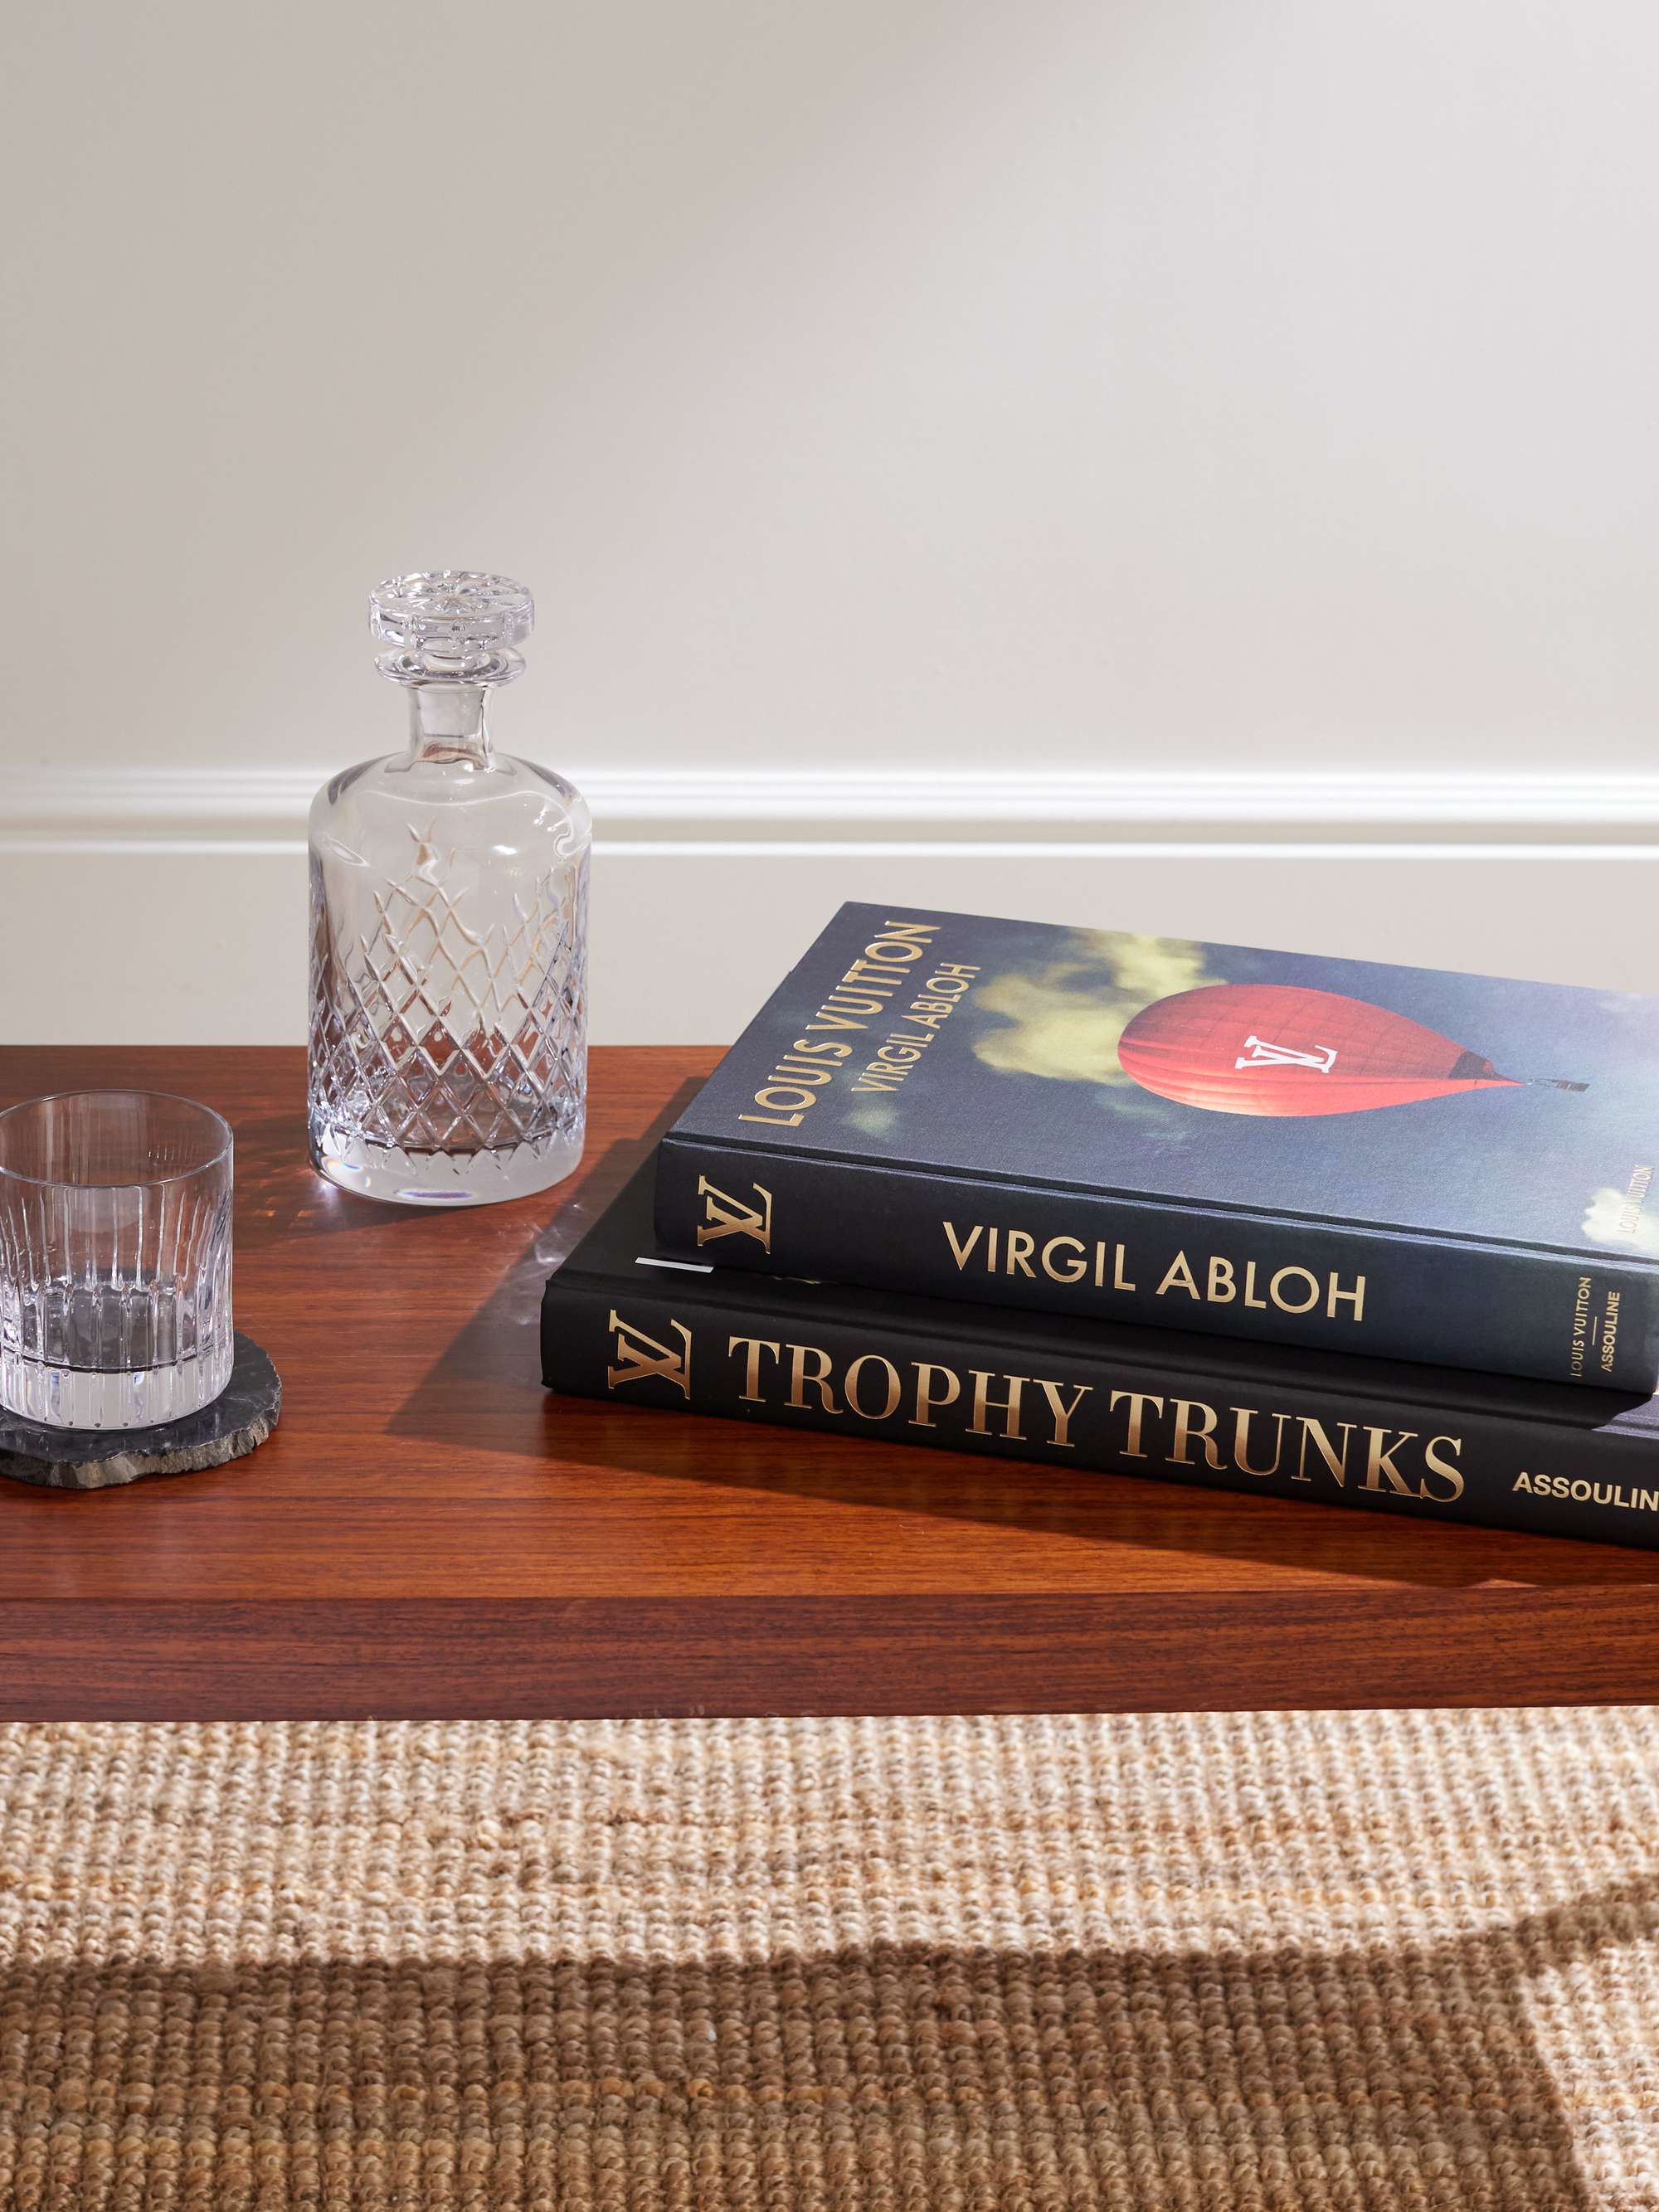 ASSOULINE Louis Vuitton: Trophy Trunks Hardcover Book